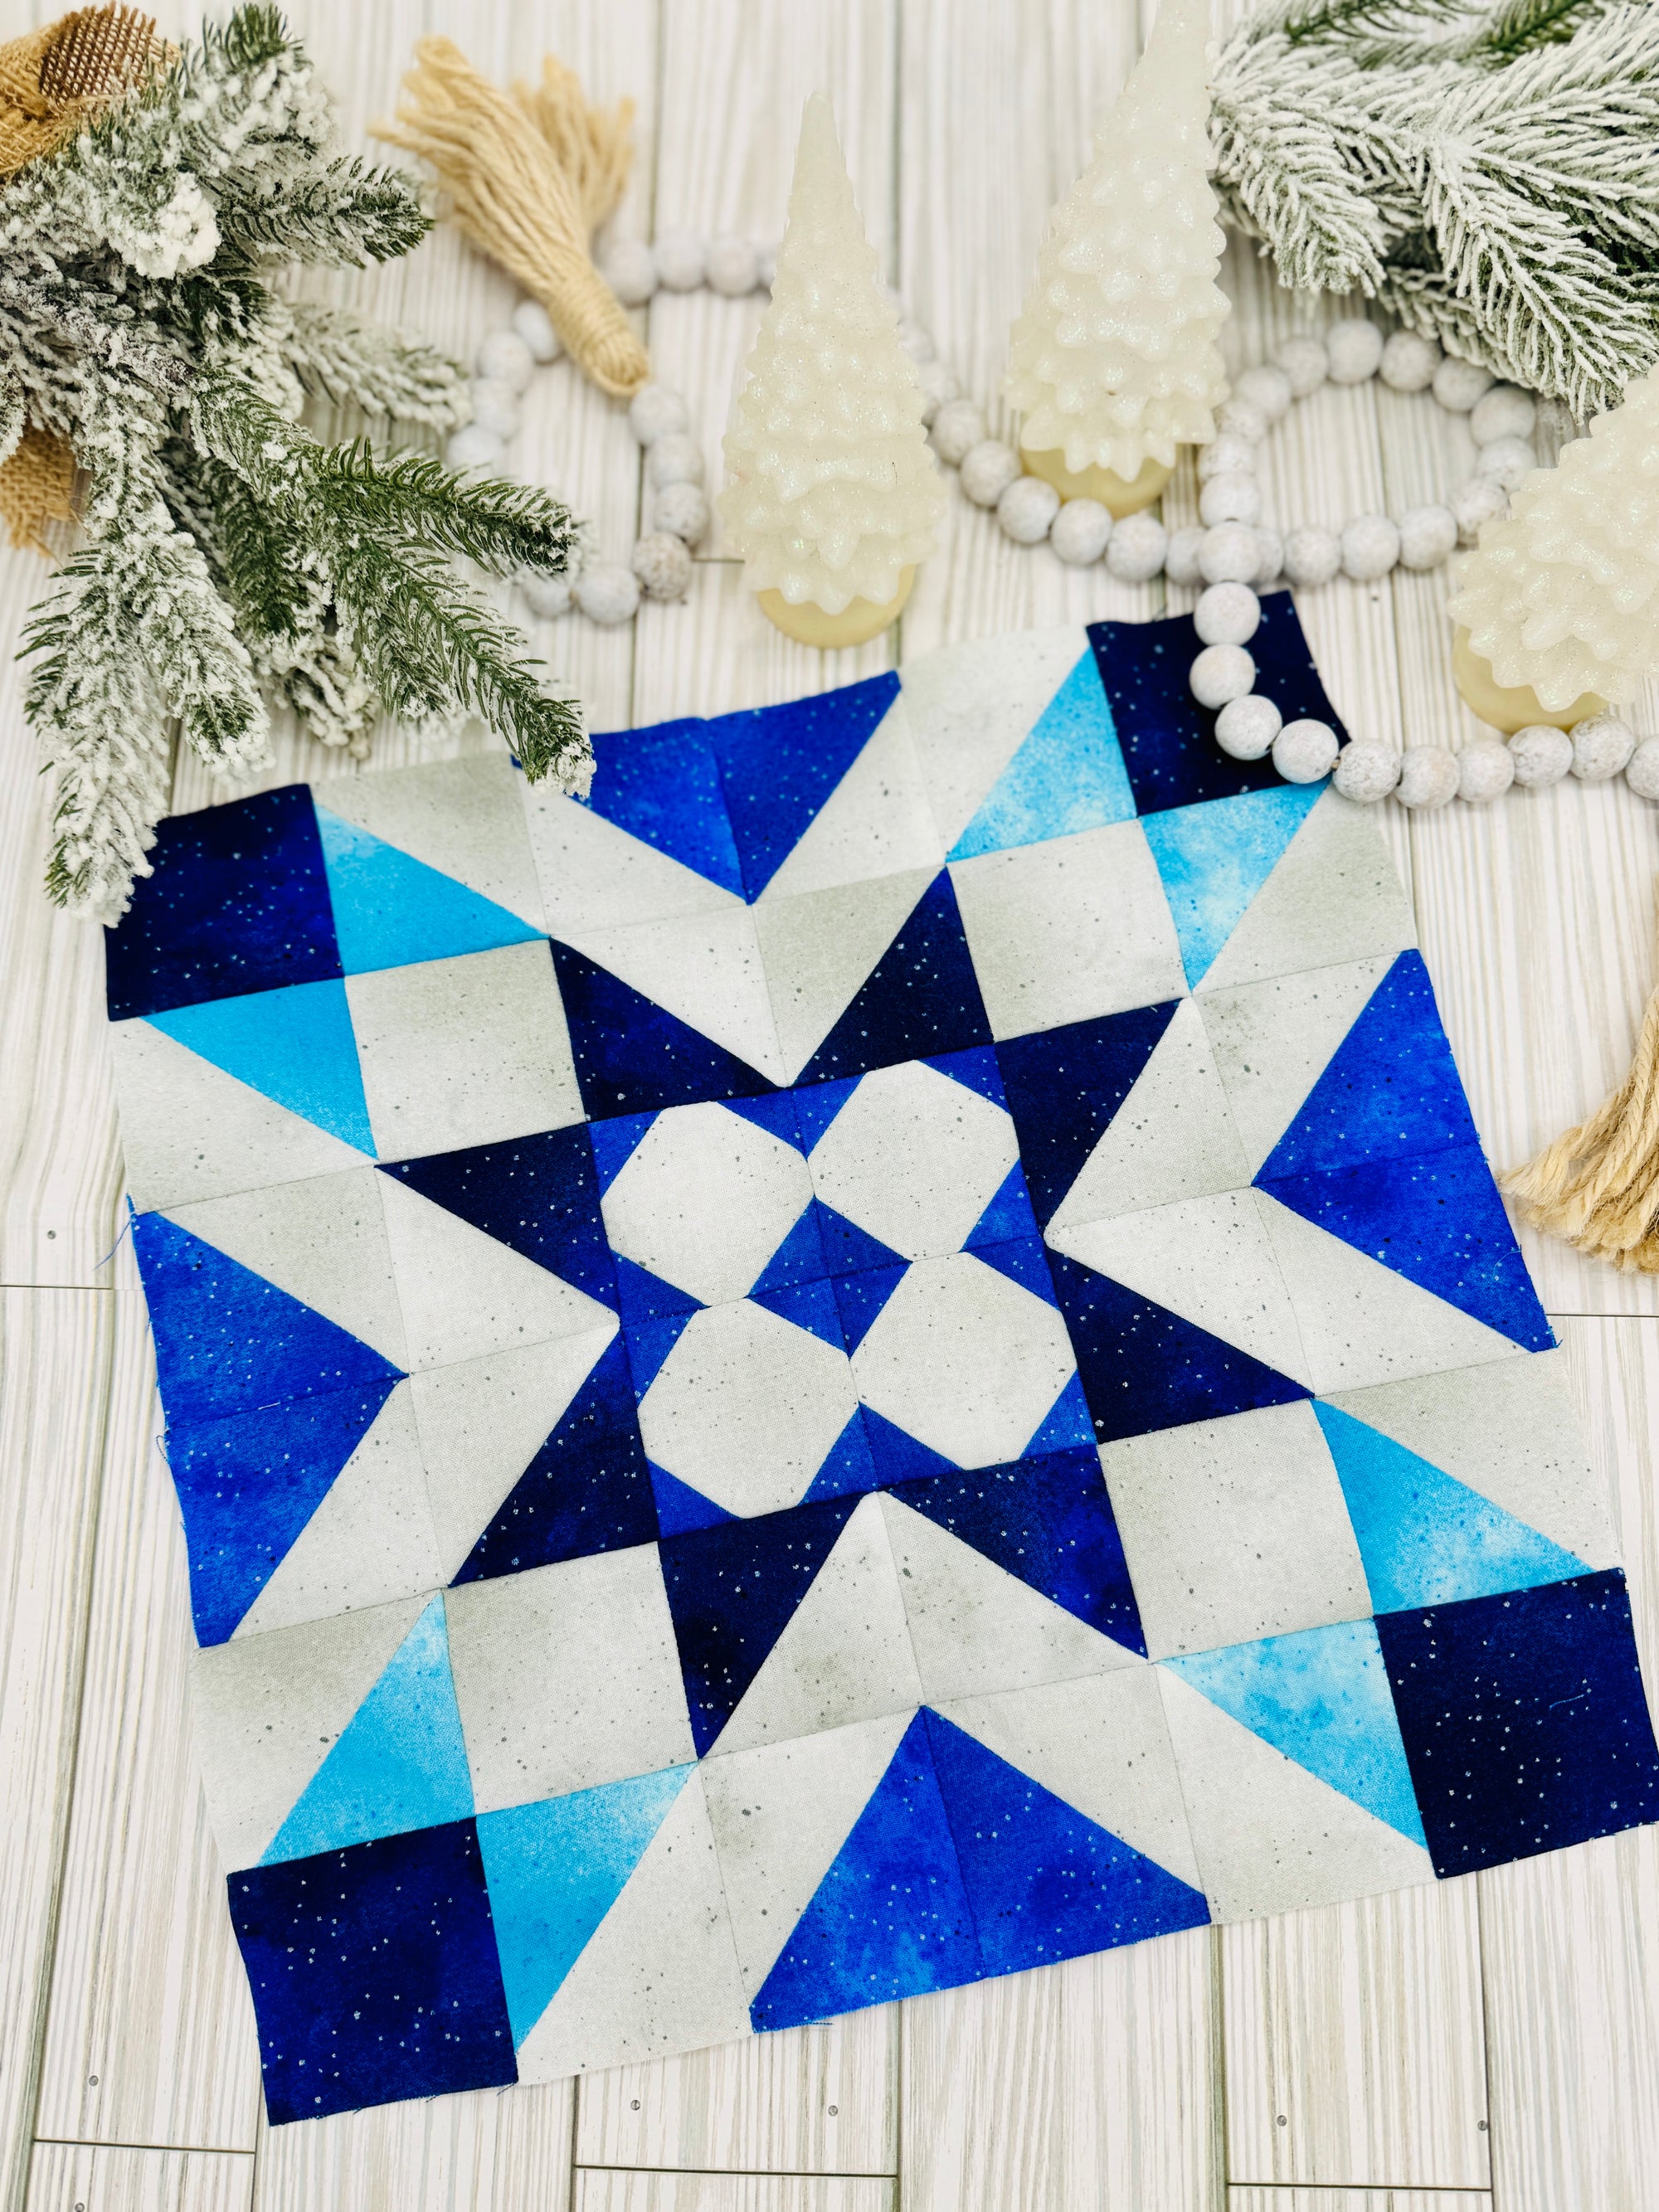 Shining Snowflake Quilt Block & Bonus Pillow Cover